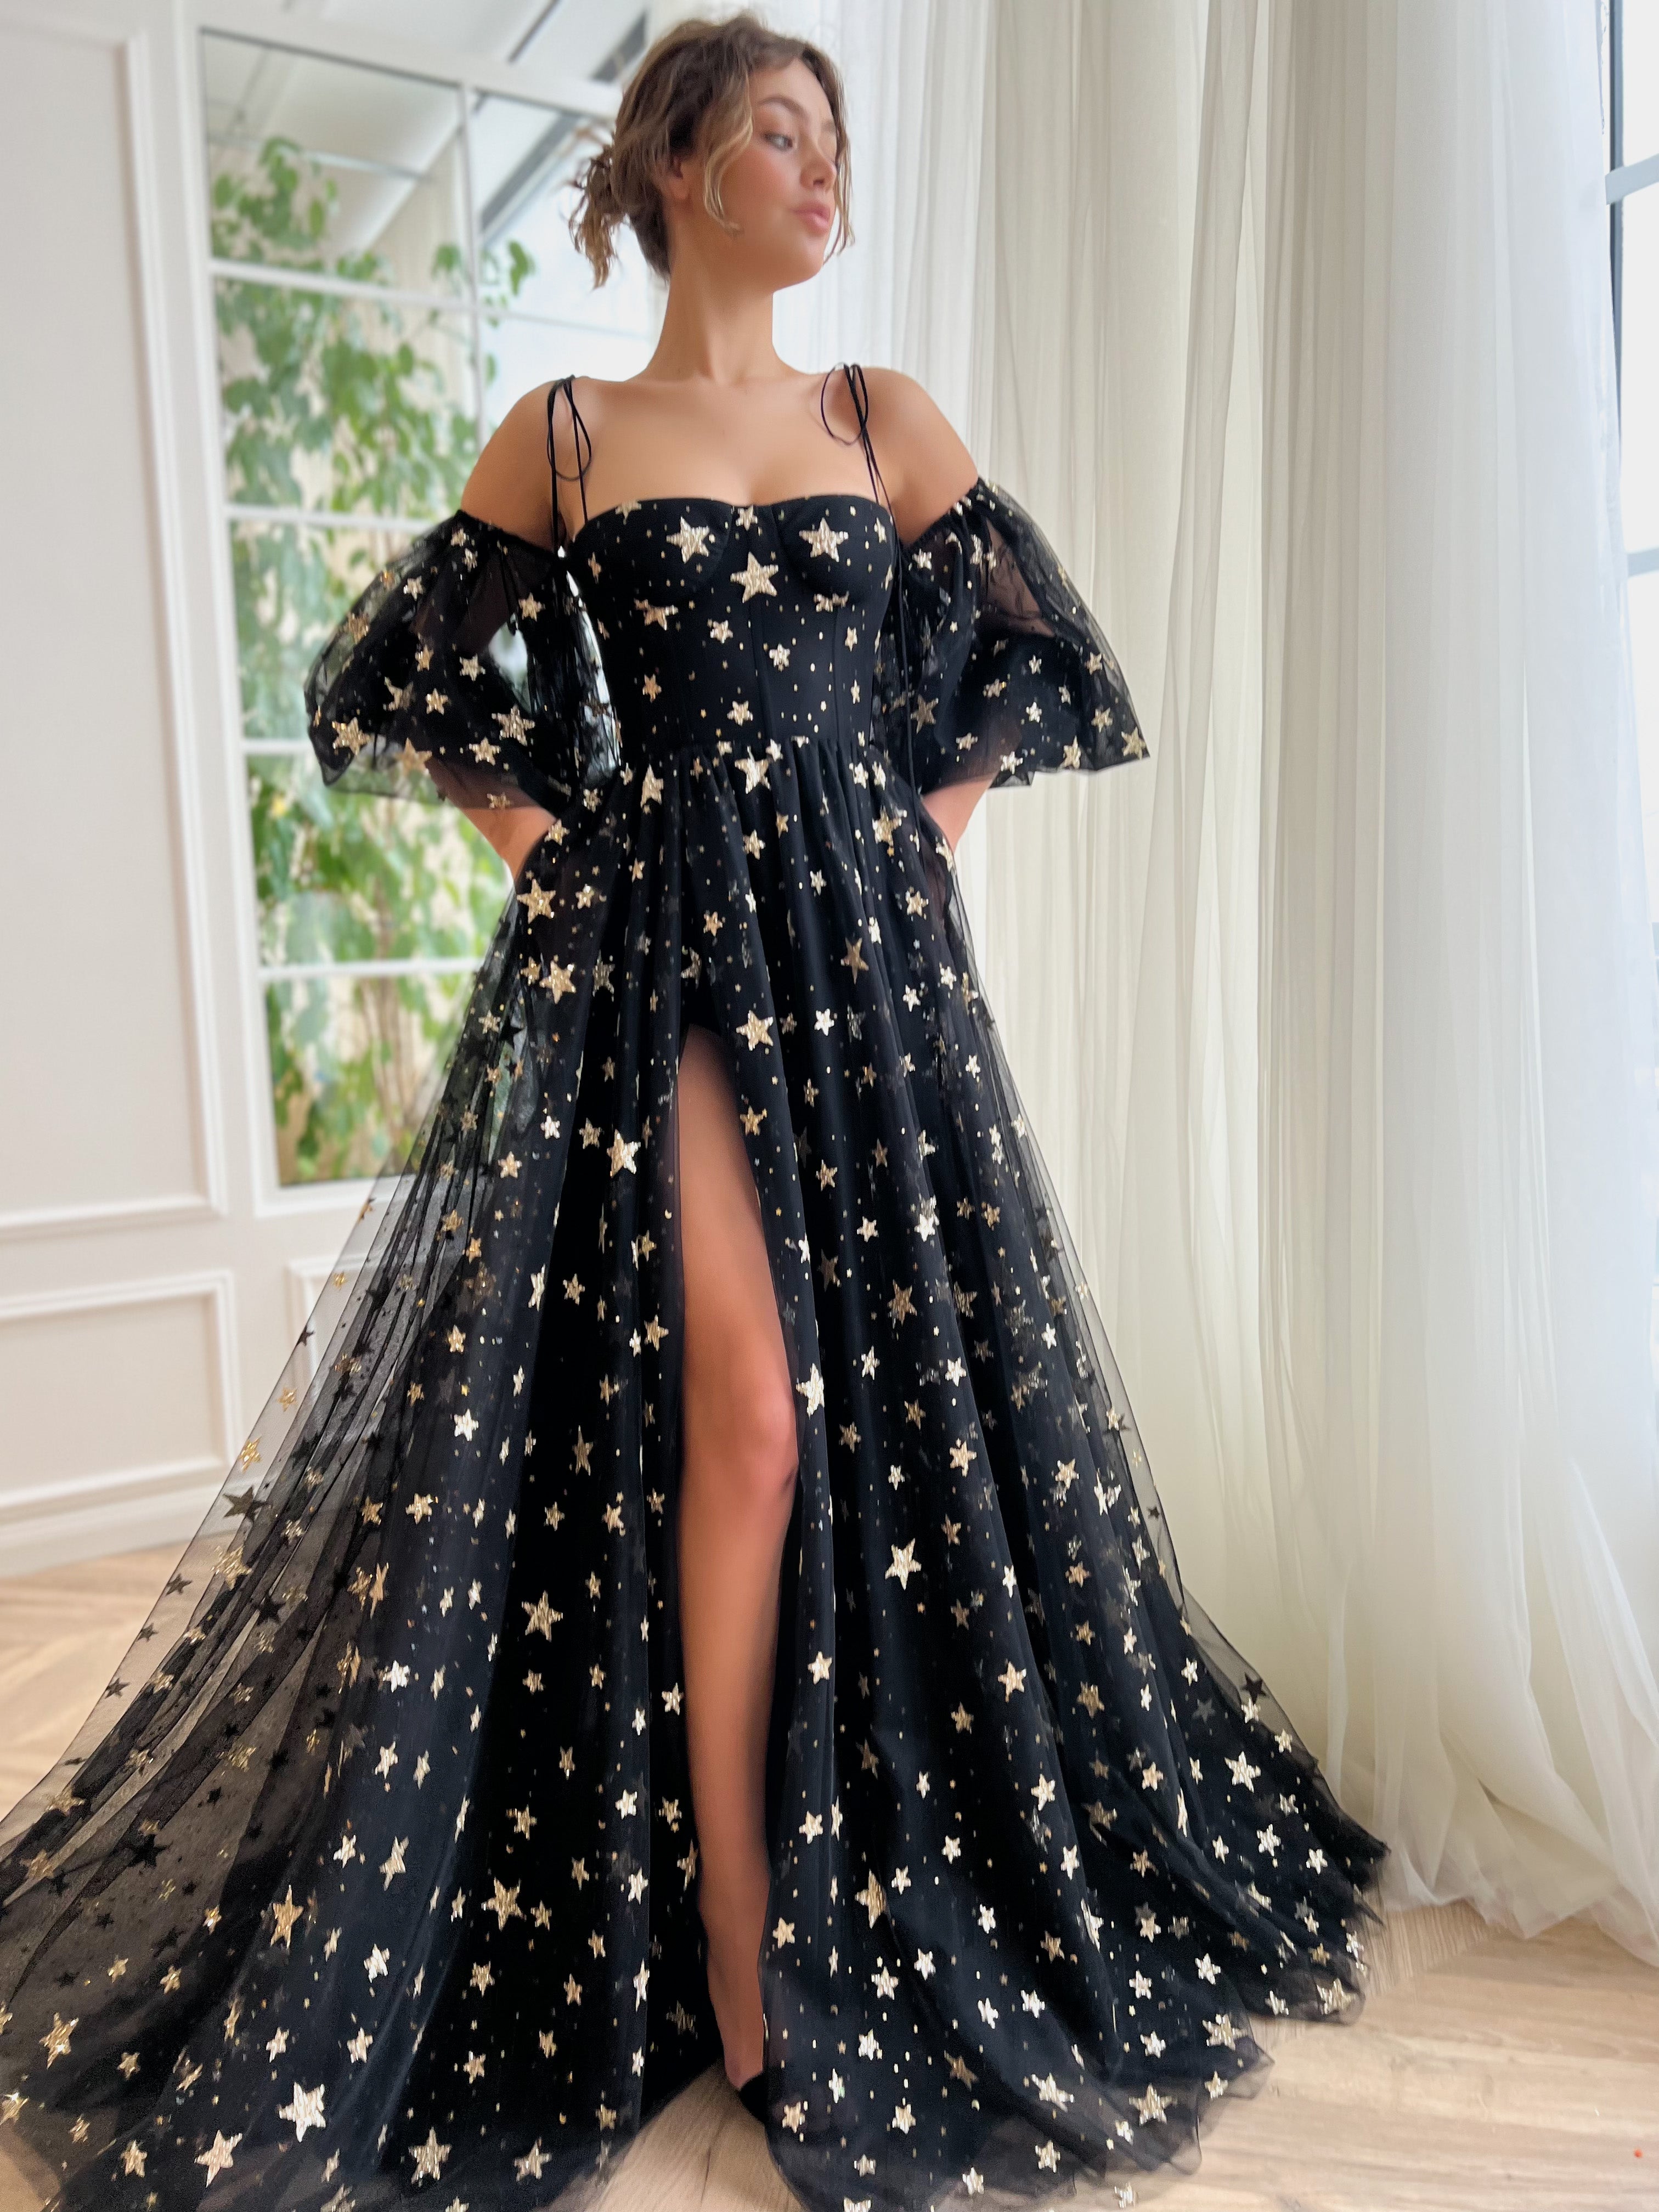 Black Wedding Dresses Lace Princess Silhouette Long Sleeves Lace Court  Train Bridal Gown – Dbrbridal